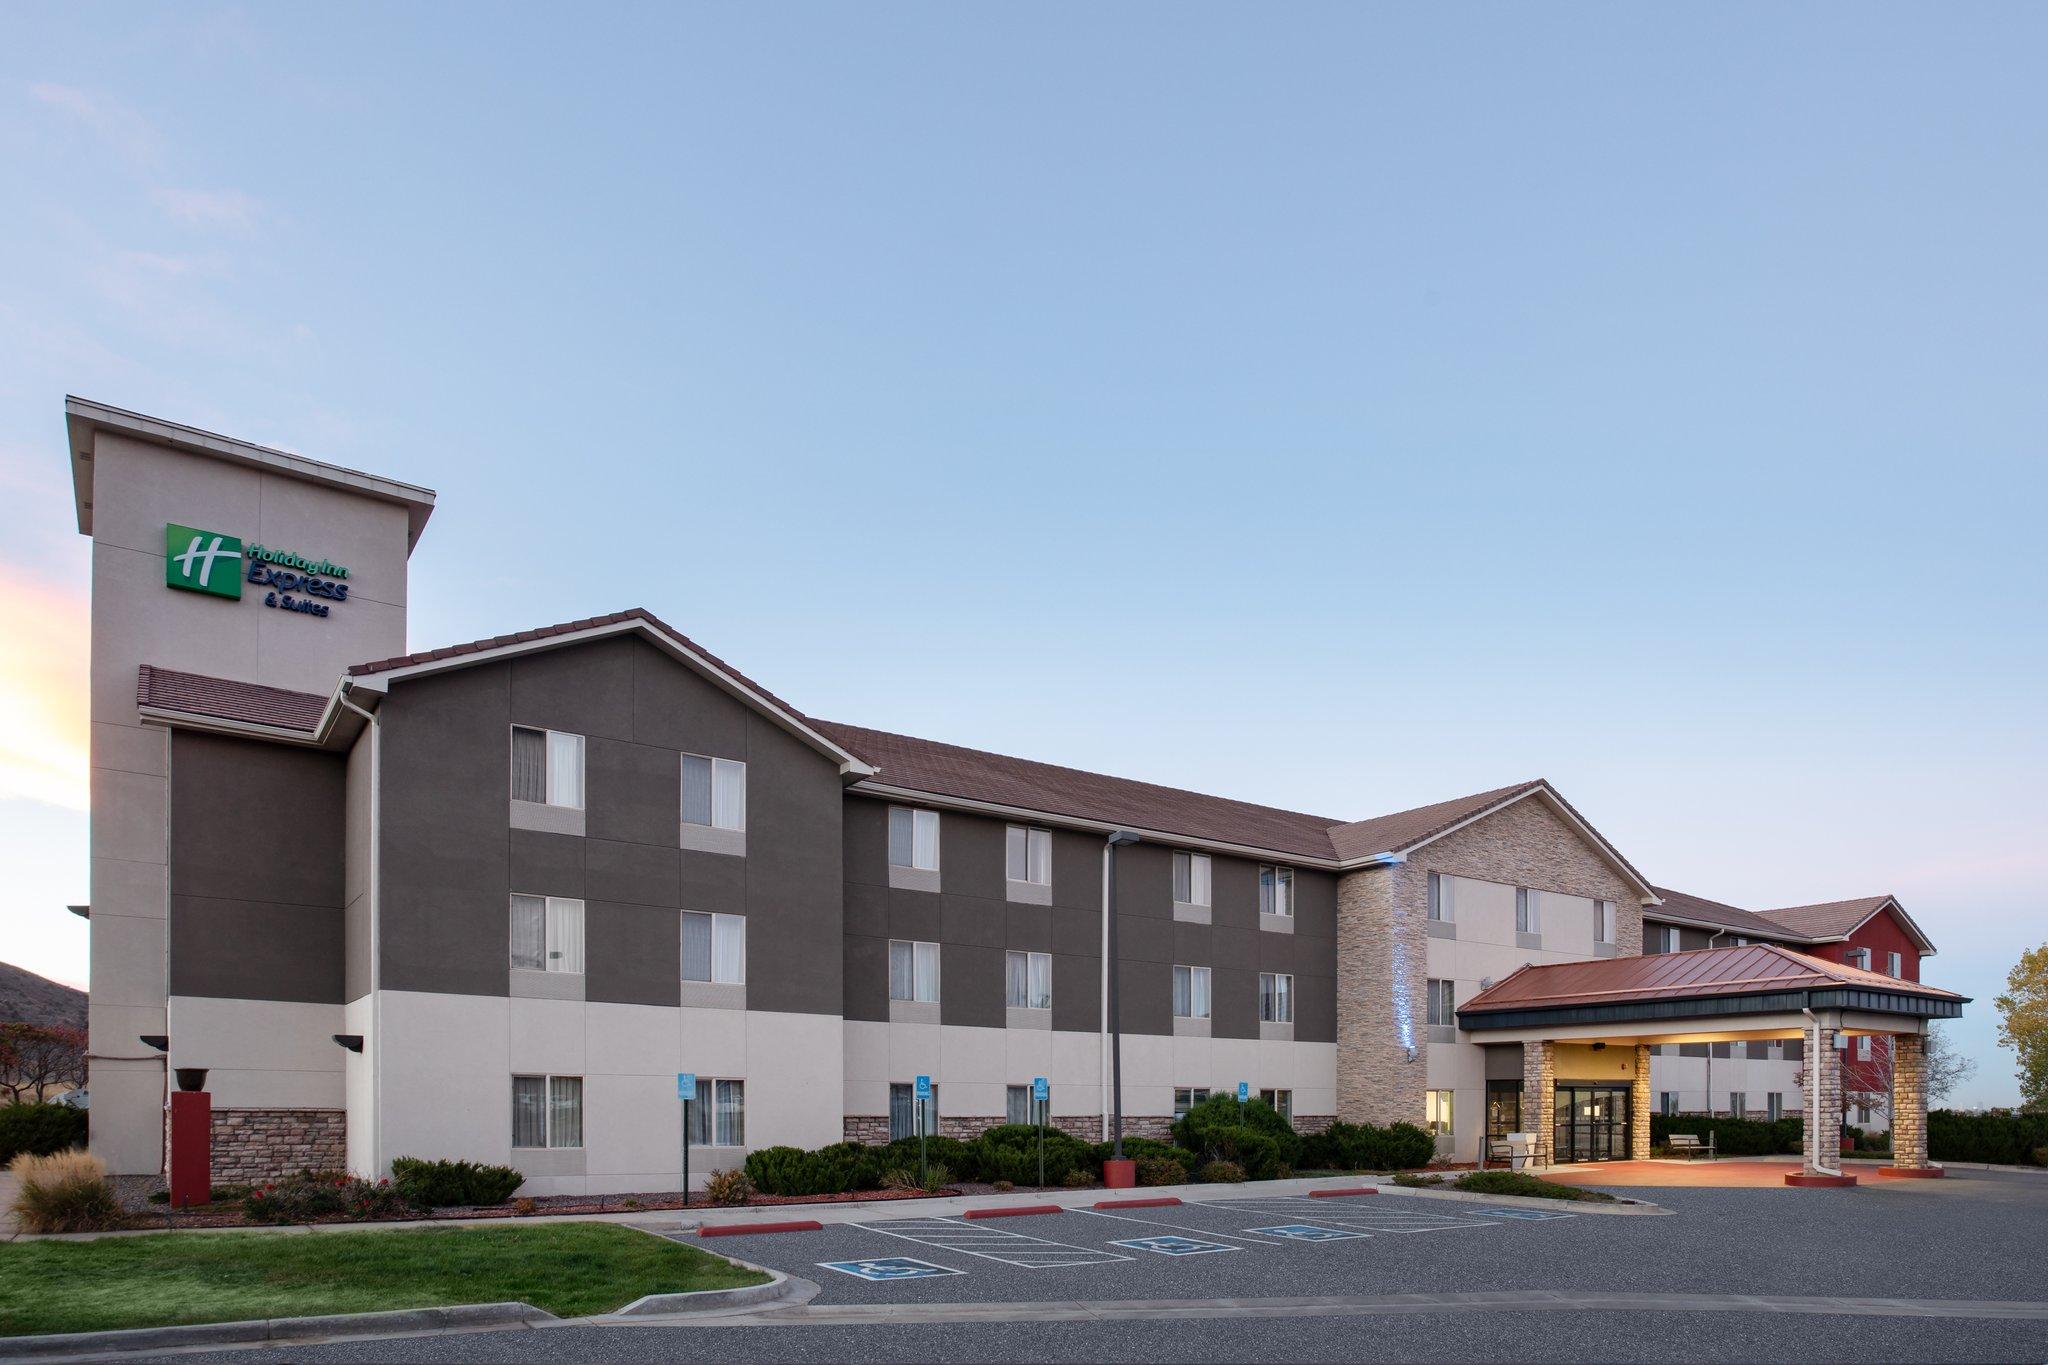 Holiday Inn Express Hotel & Suites Littleton in Littleton, CO